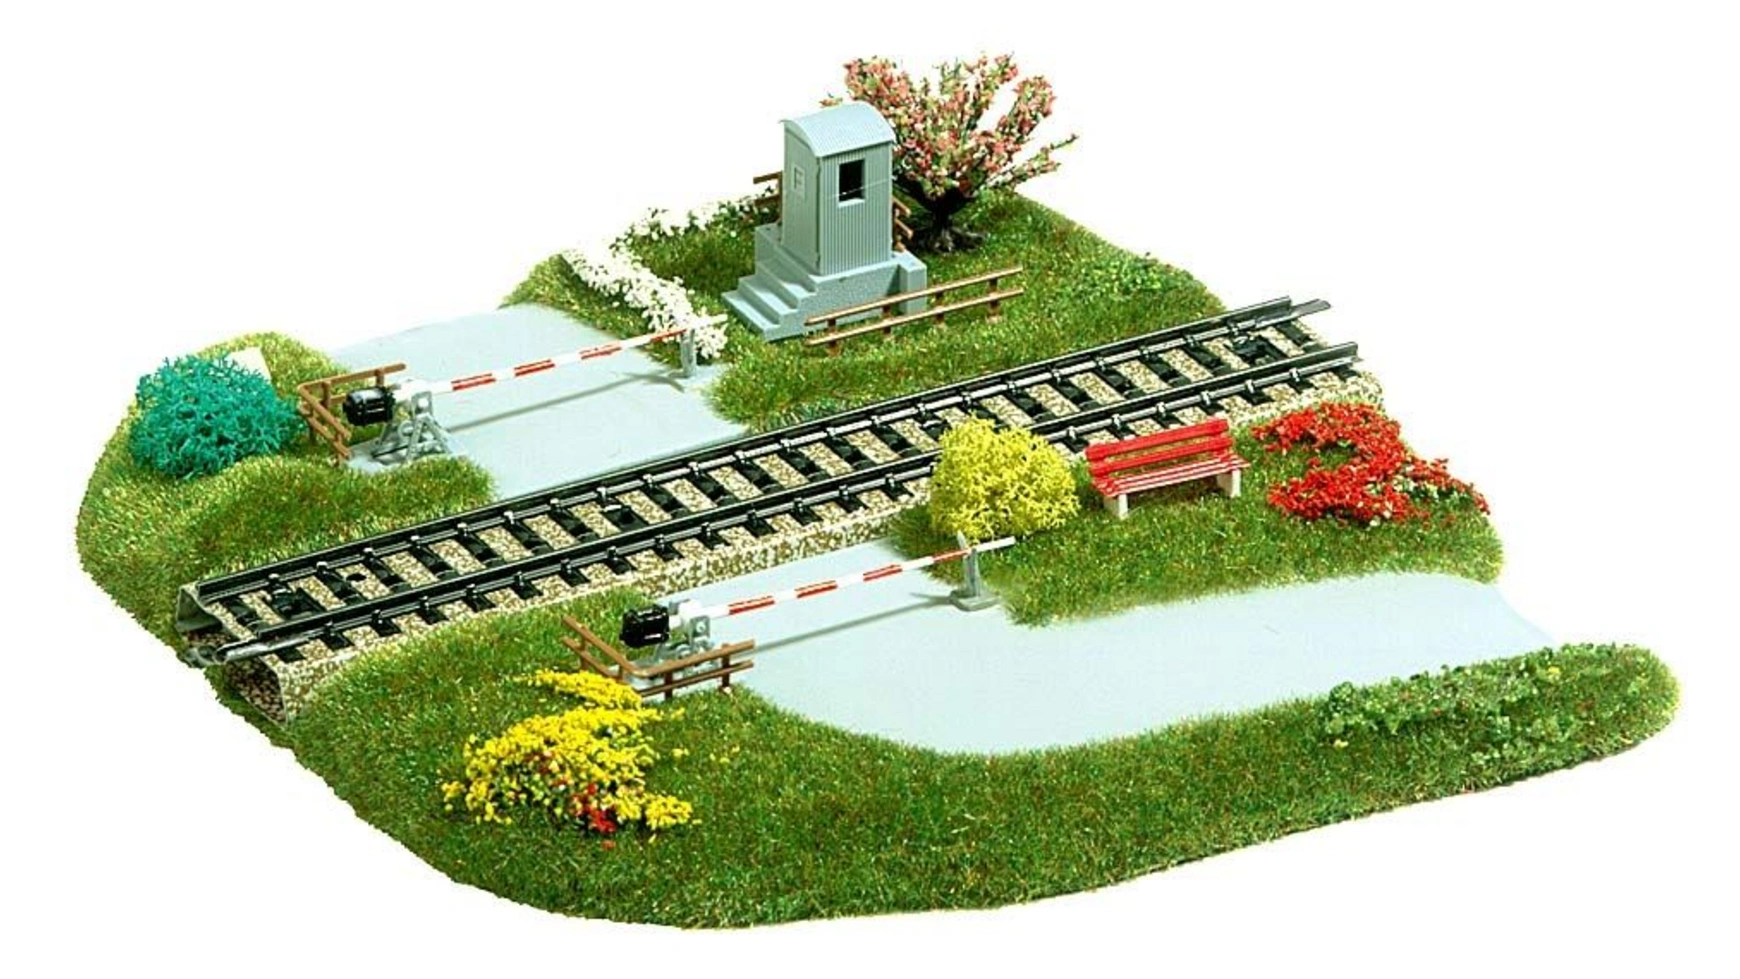 Busch Modellspielwaren Железнодорожный переезд железнодорожный переезд для деревянной дороги